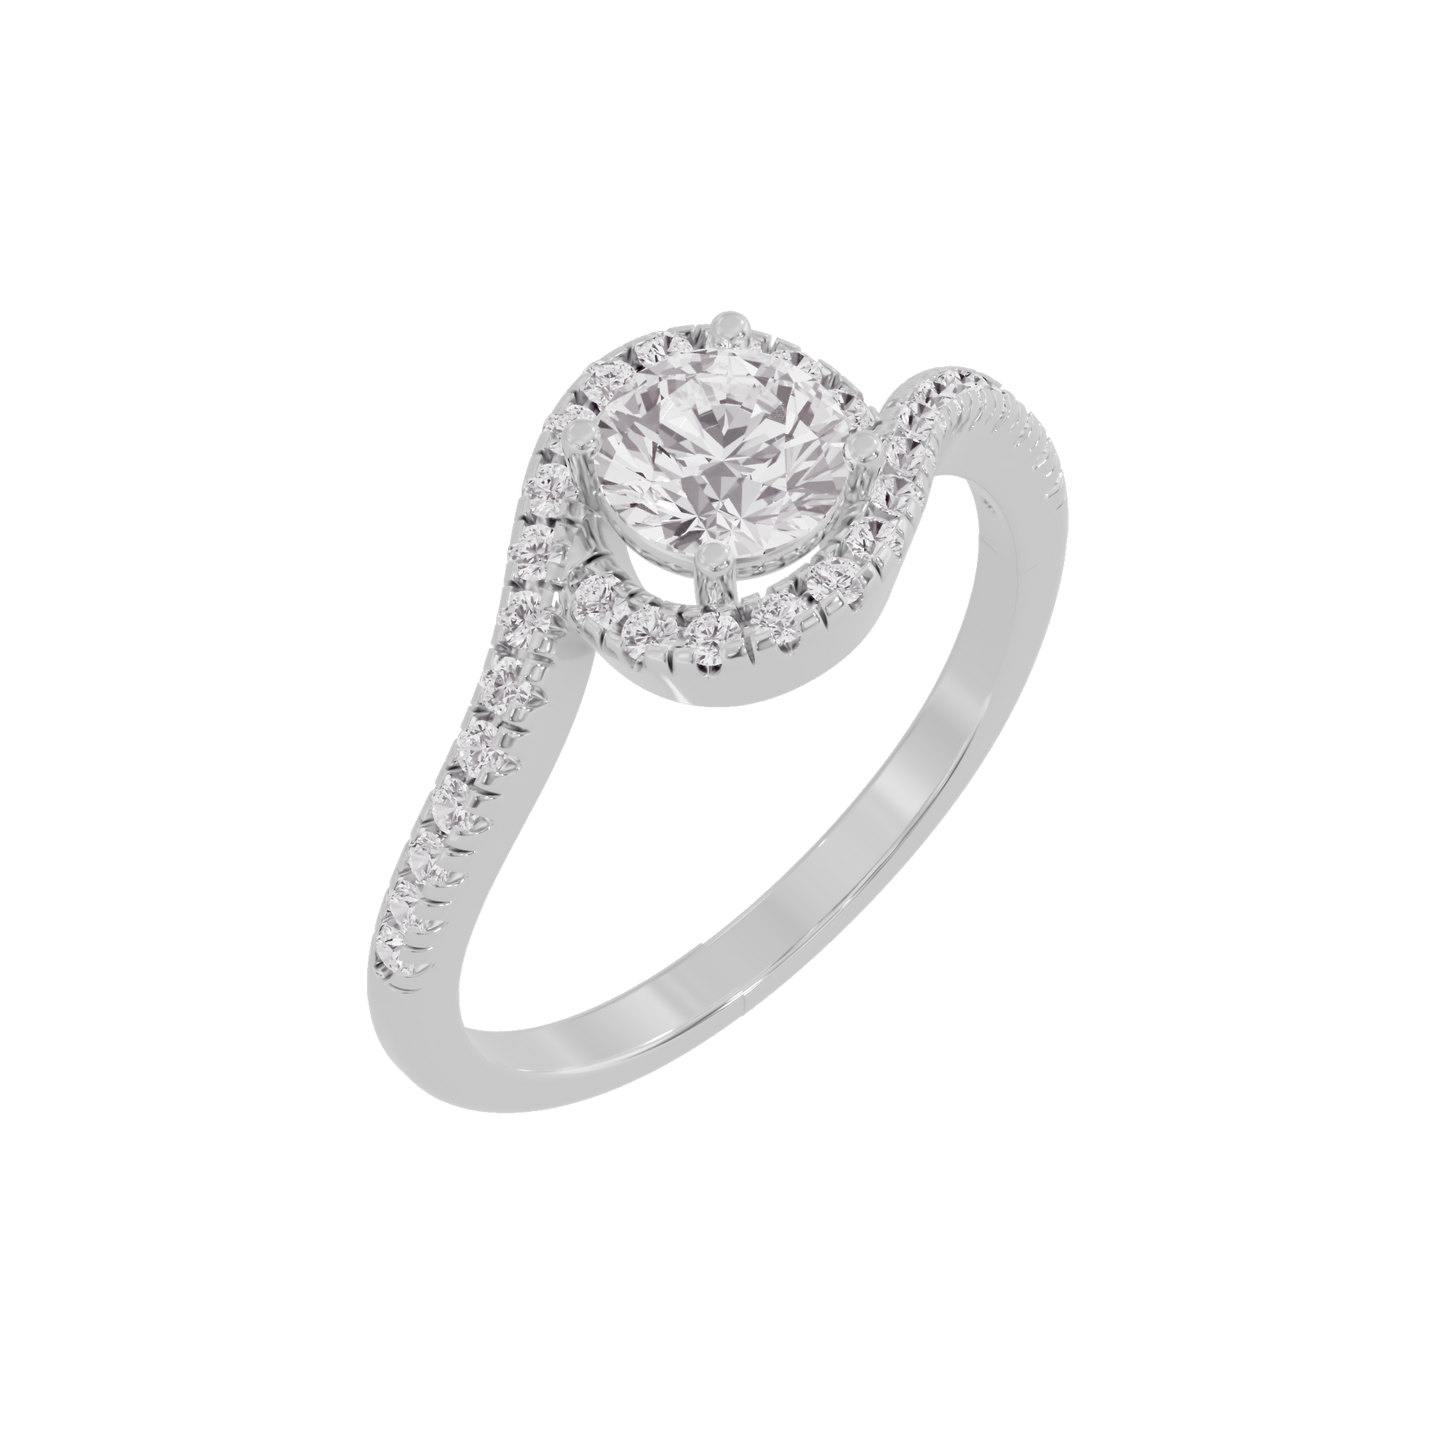 Starry Serenity Diamond Ring